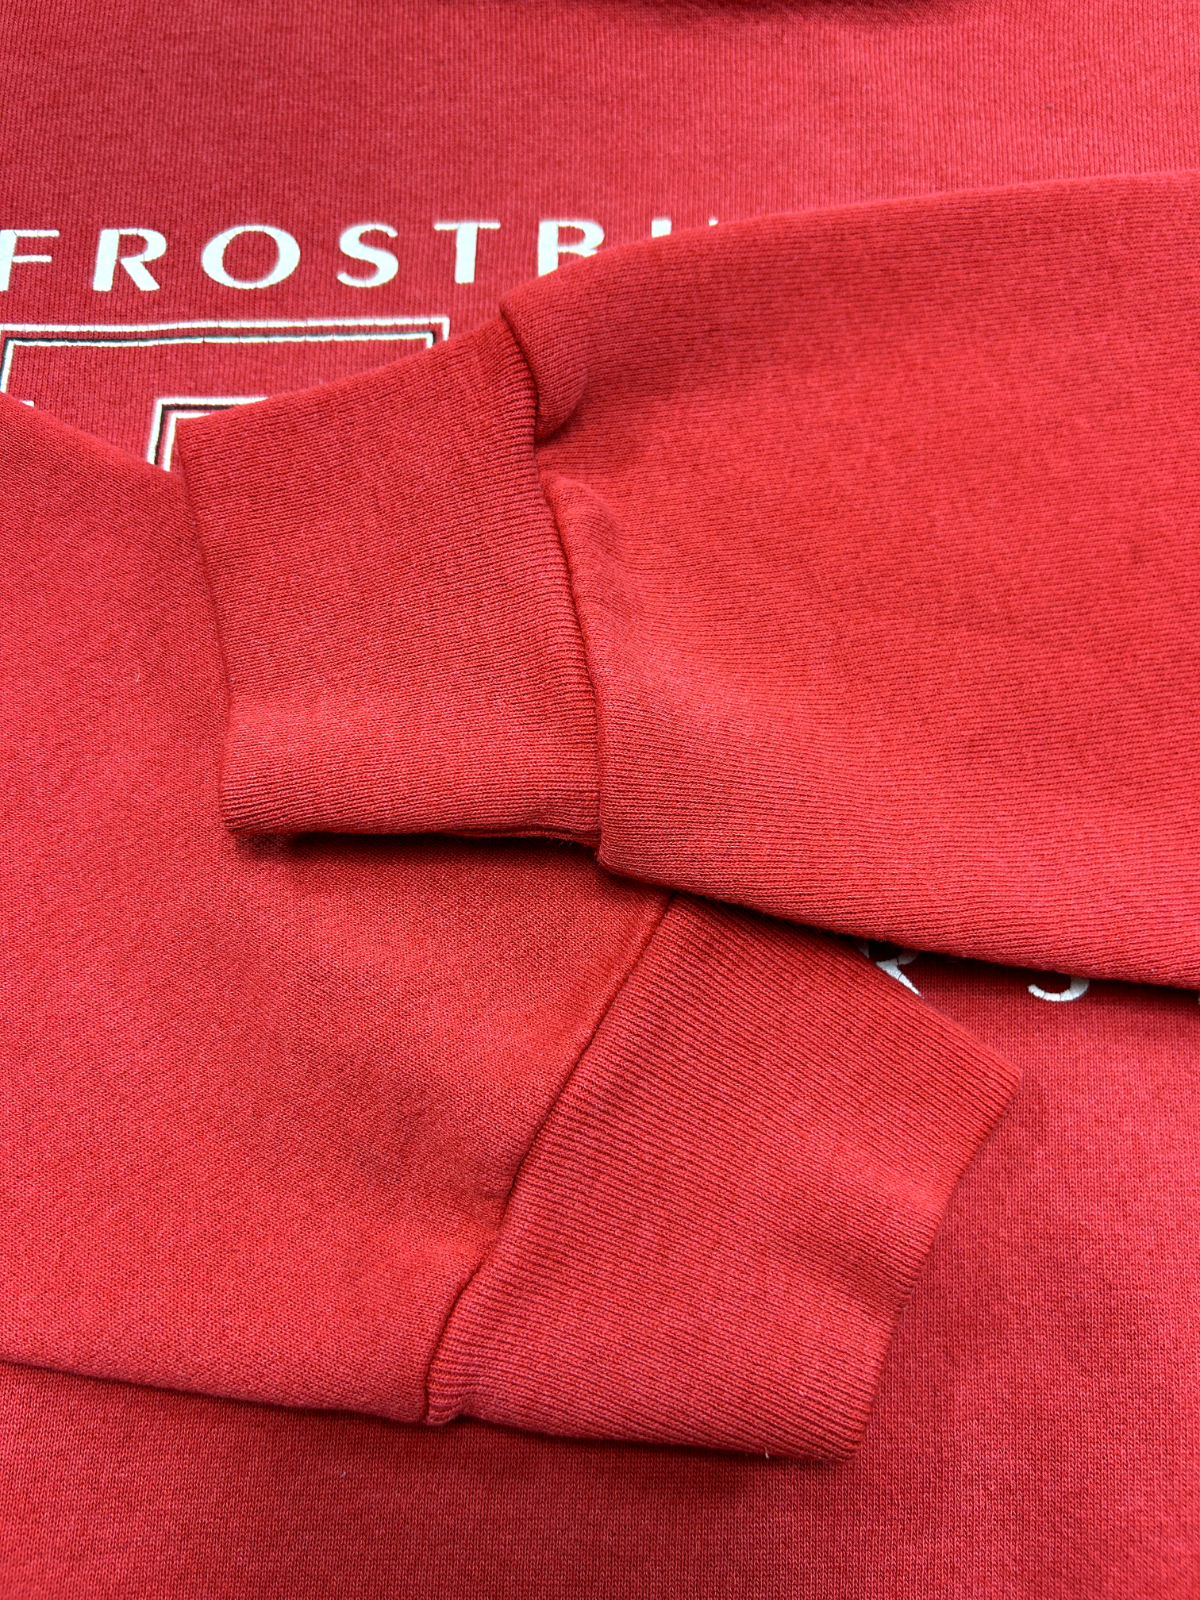 Vintage 90s Frost Bird State University NCAA Graphic Spellout Sweatshirt Sz 2XL